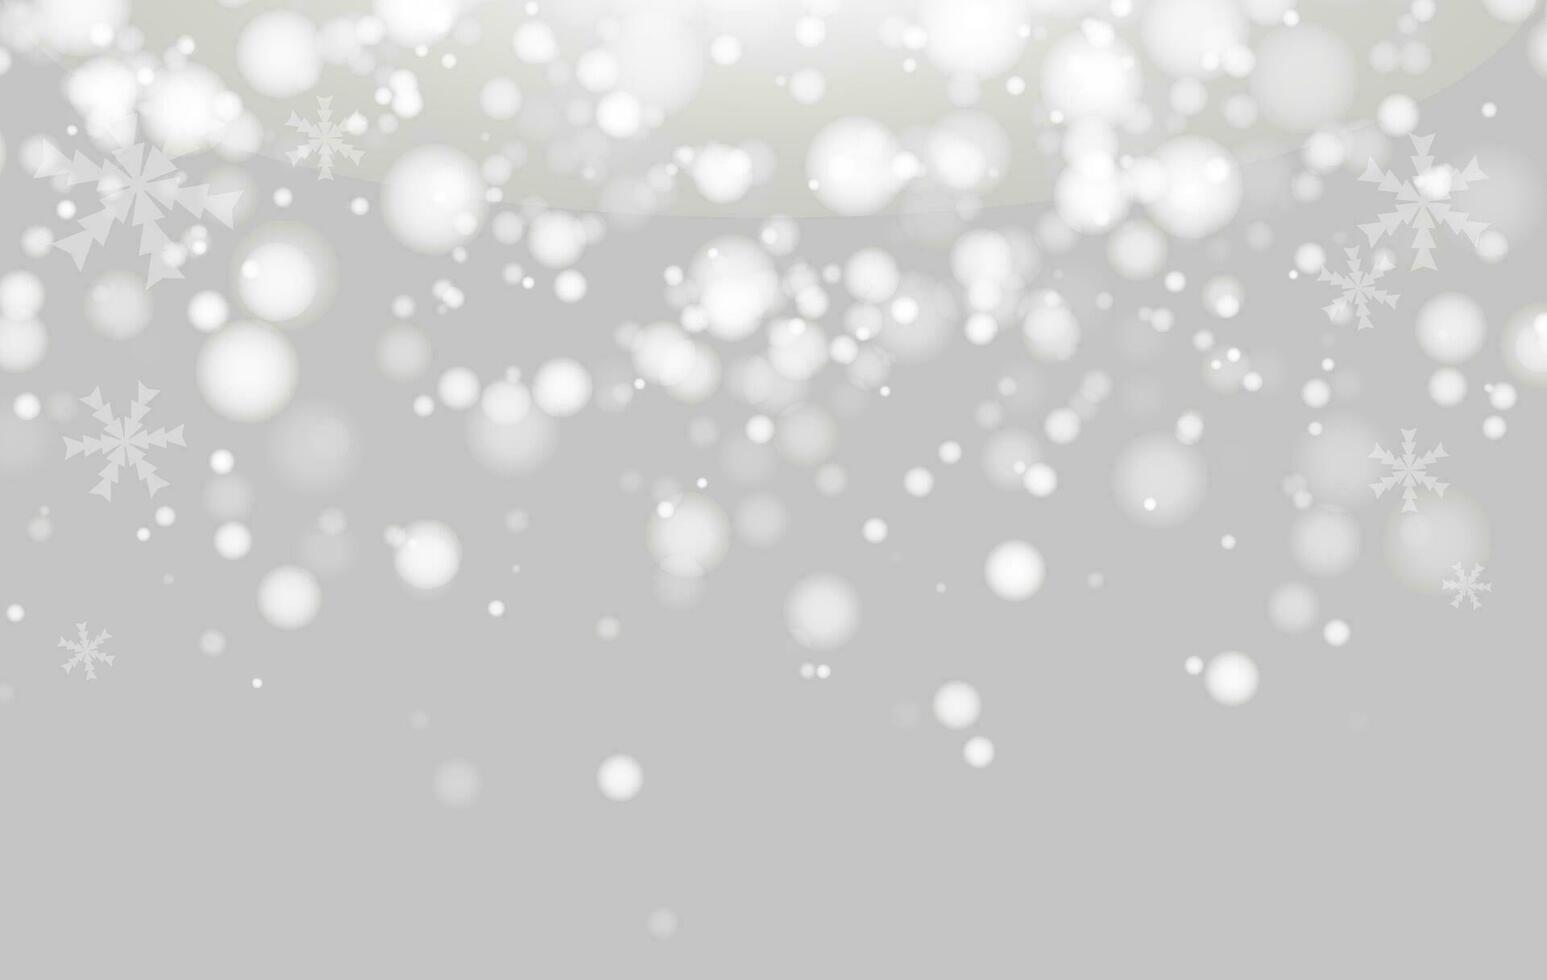 abstrato Natal fundo com flocos de neve, cinza, branco bokeh. vetor fundos.